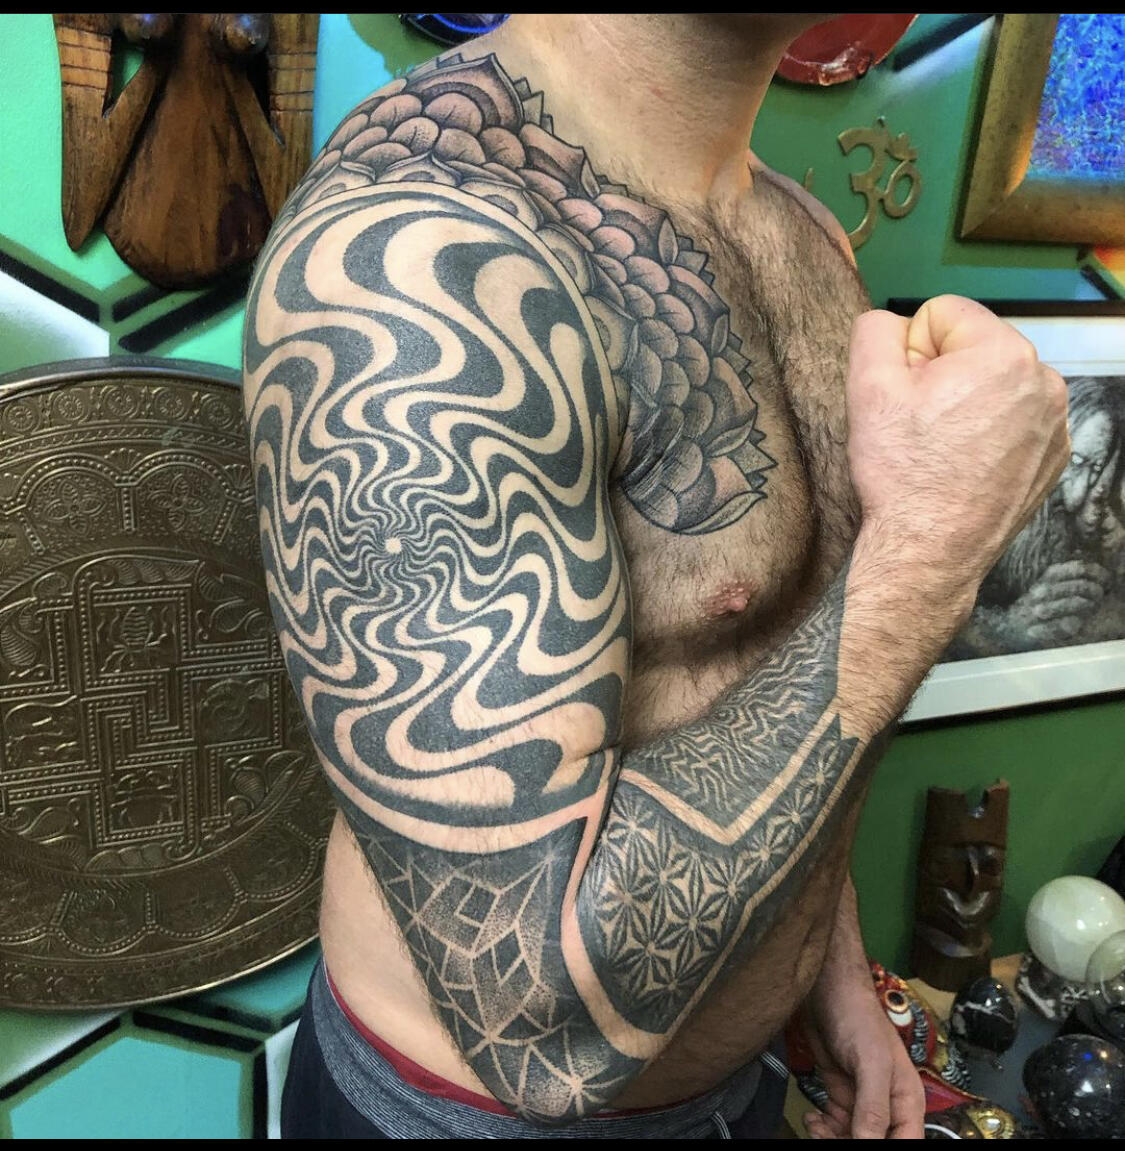 The most insightful stories about Tattoo Design - Medium